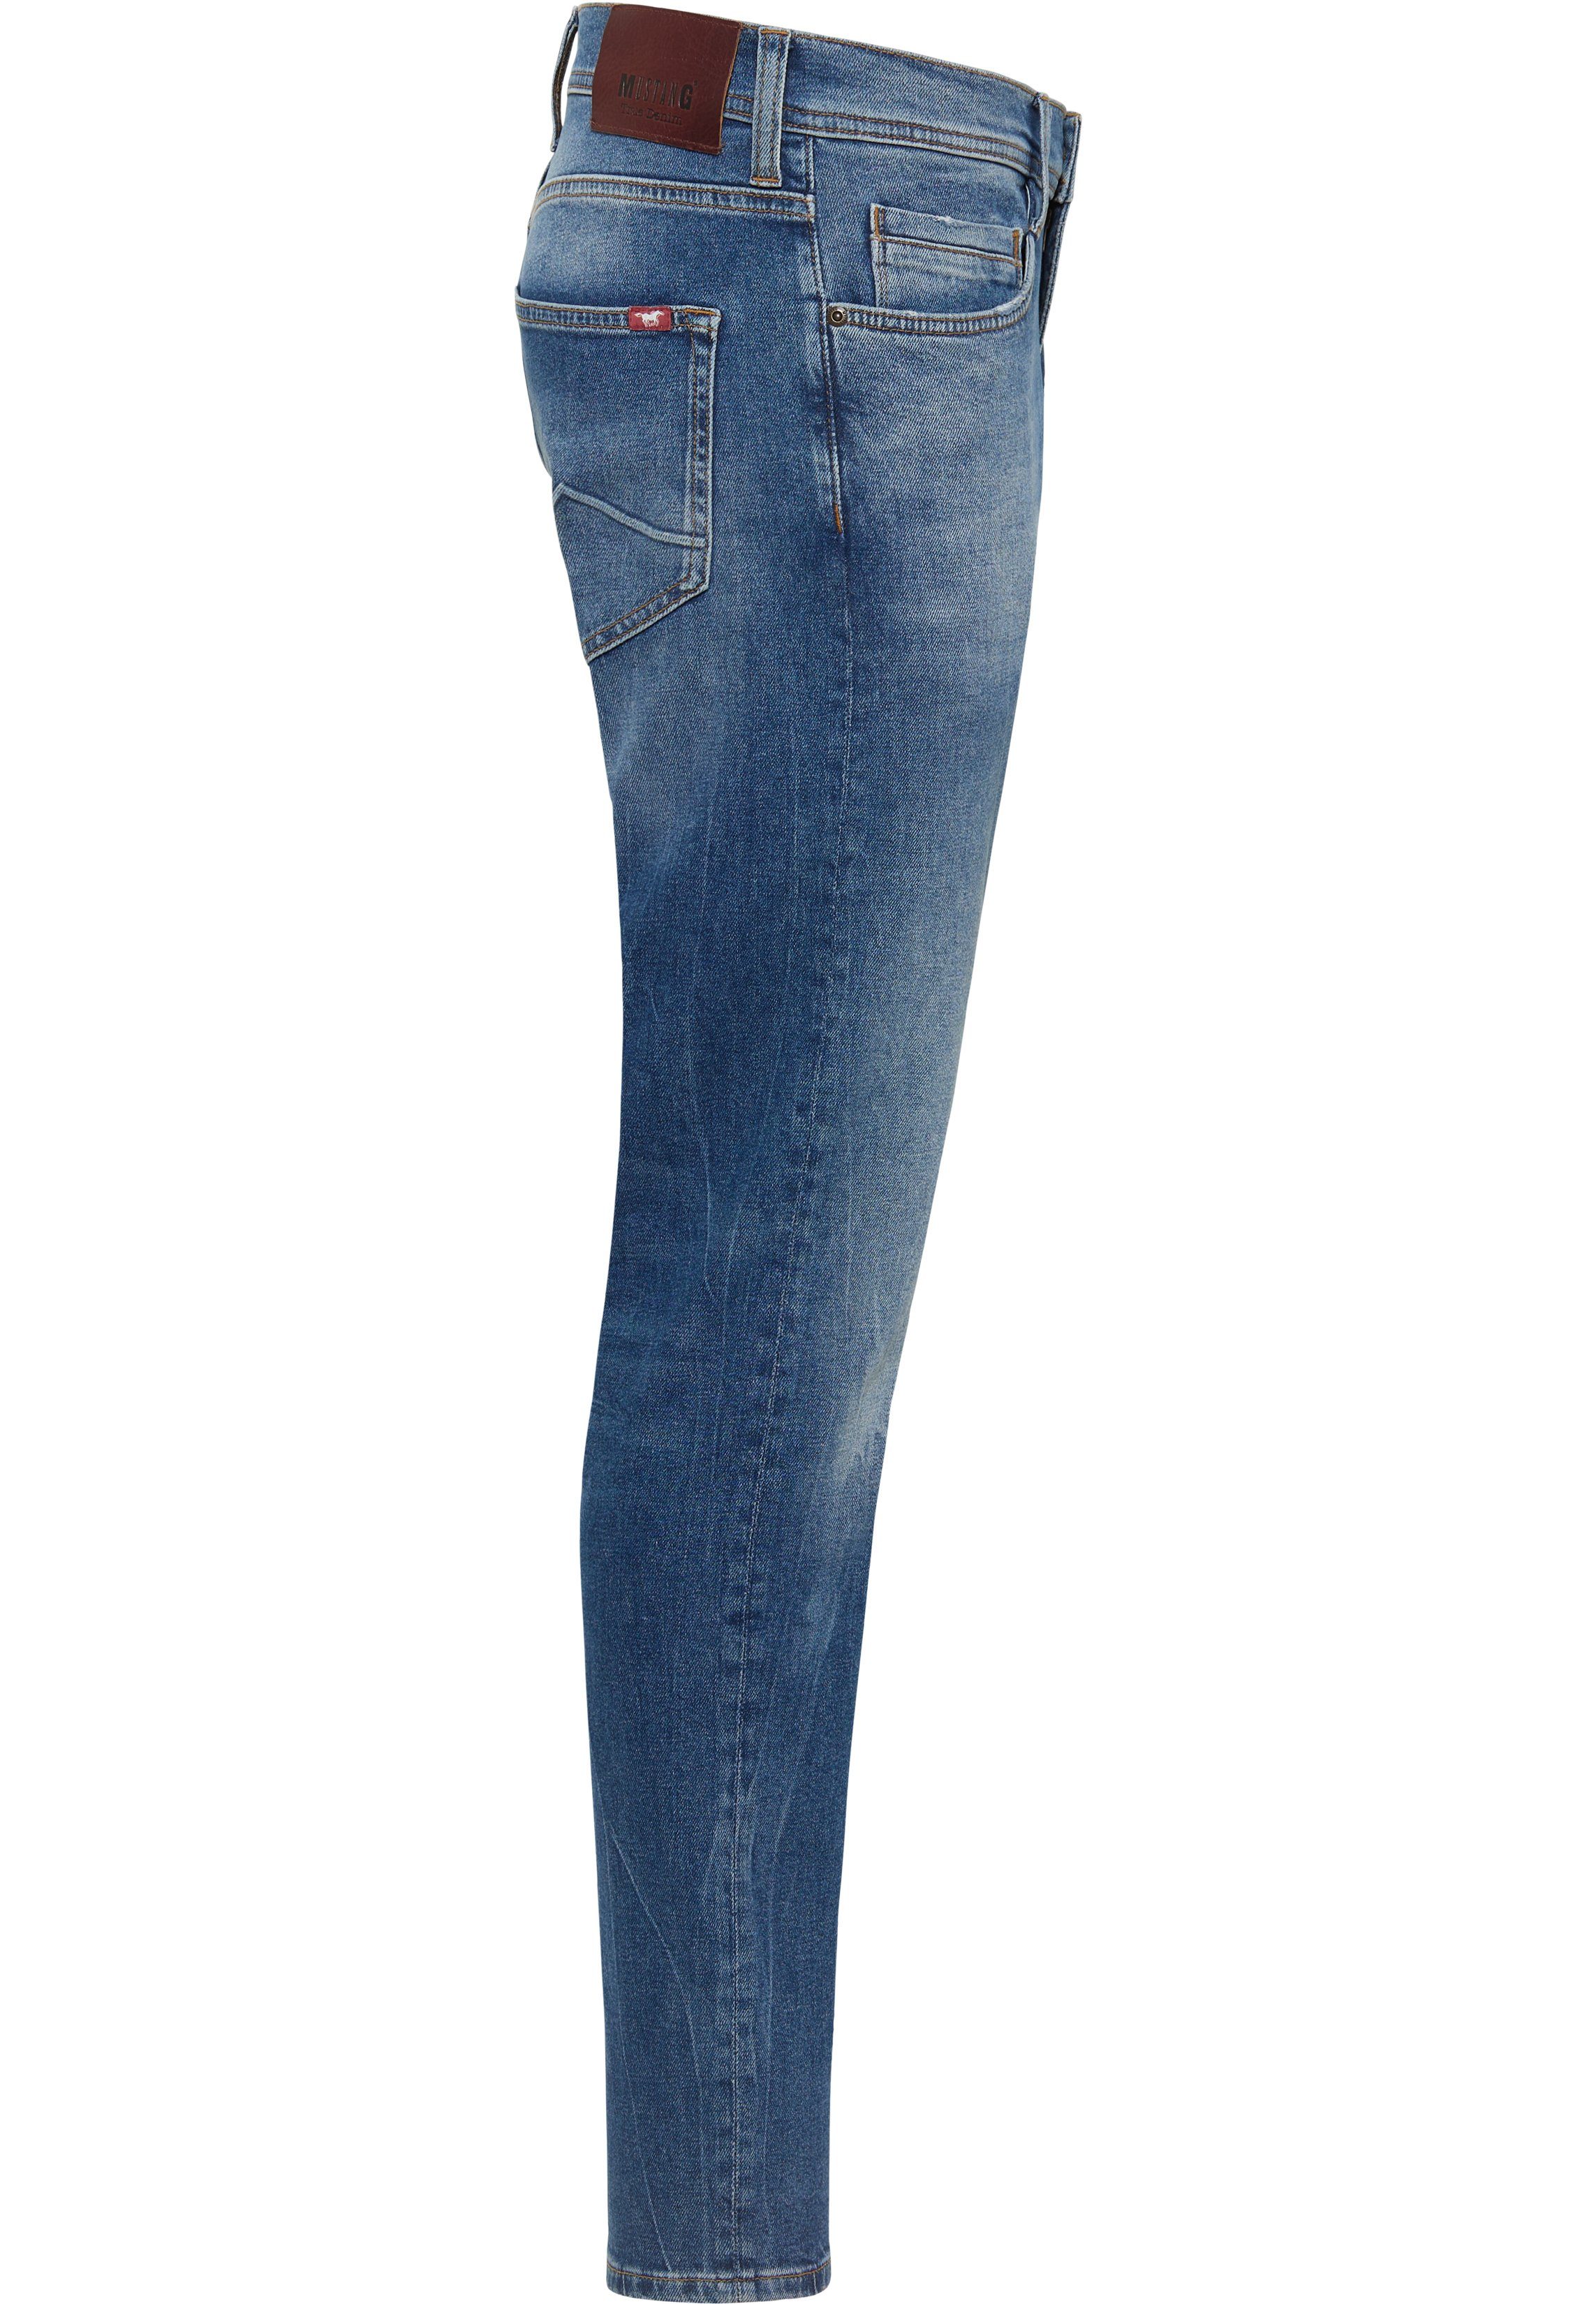 MUSTANG 5-Pocket-Jeans medium used Oregon blue Tapered